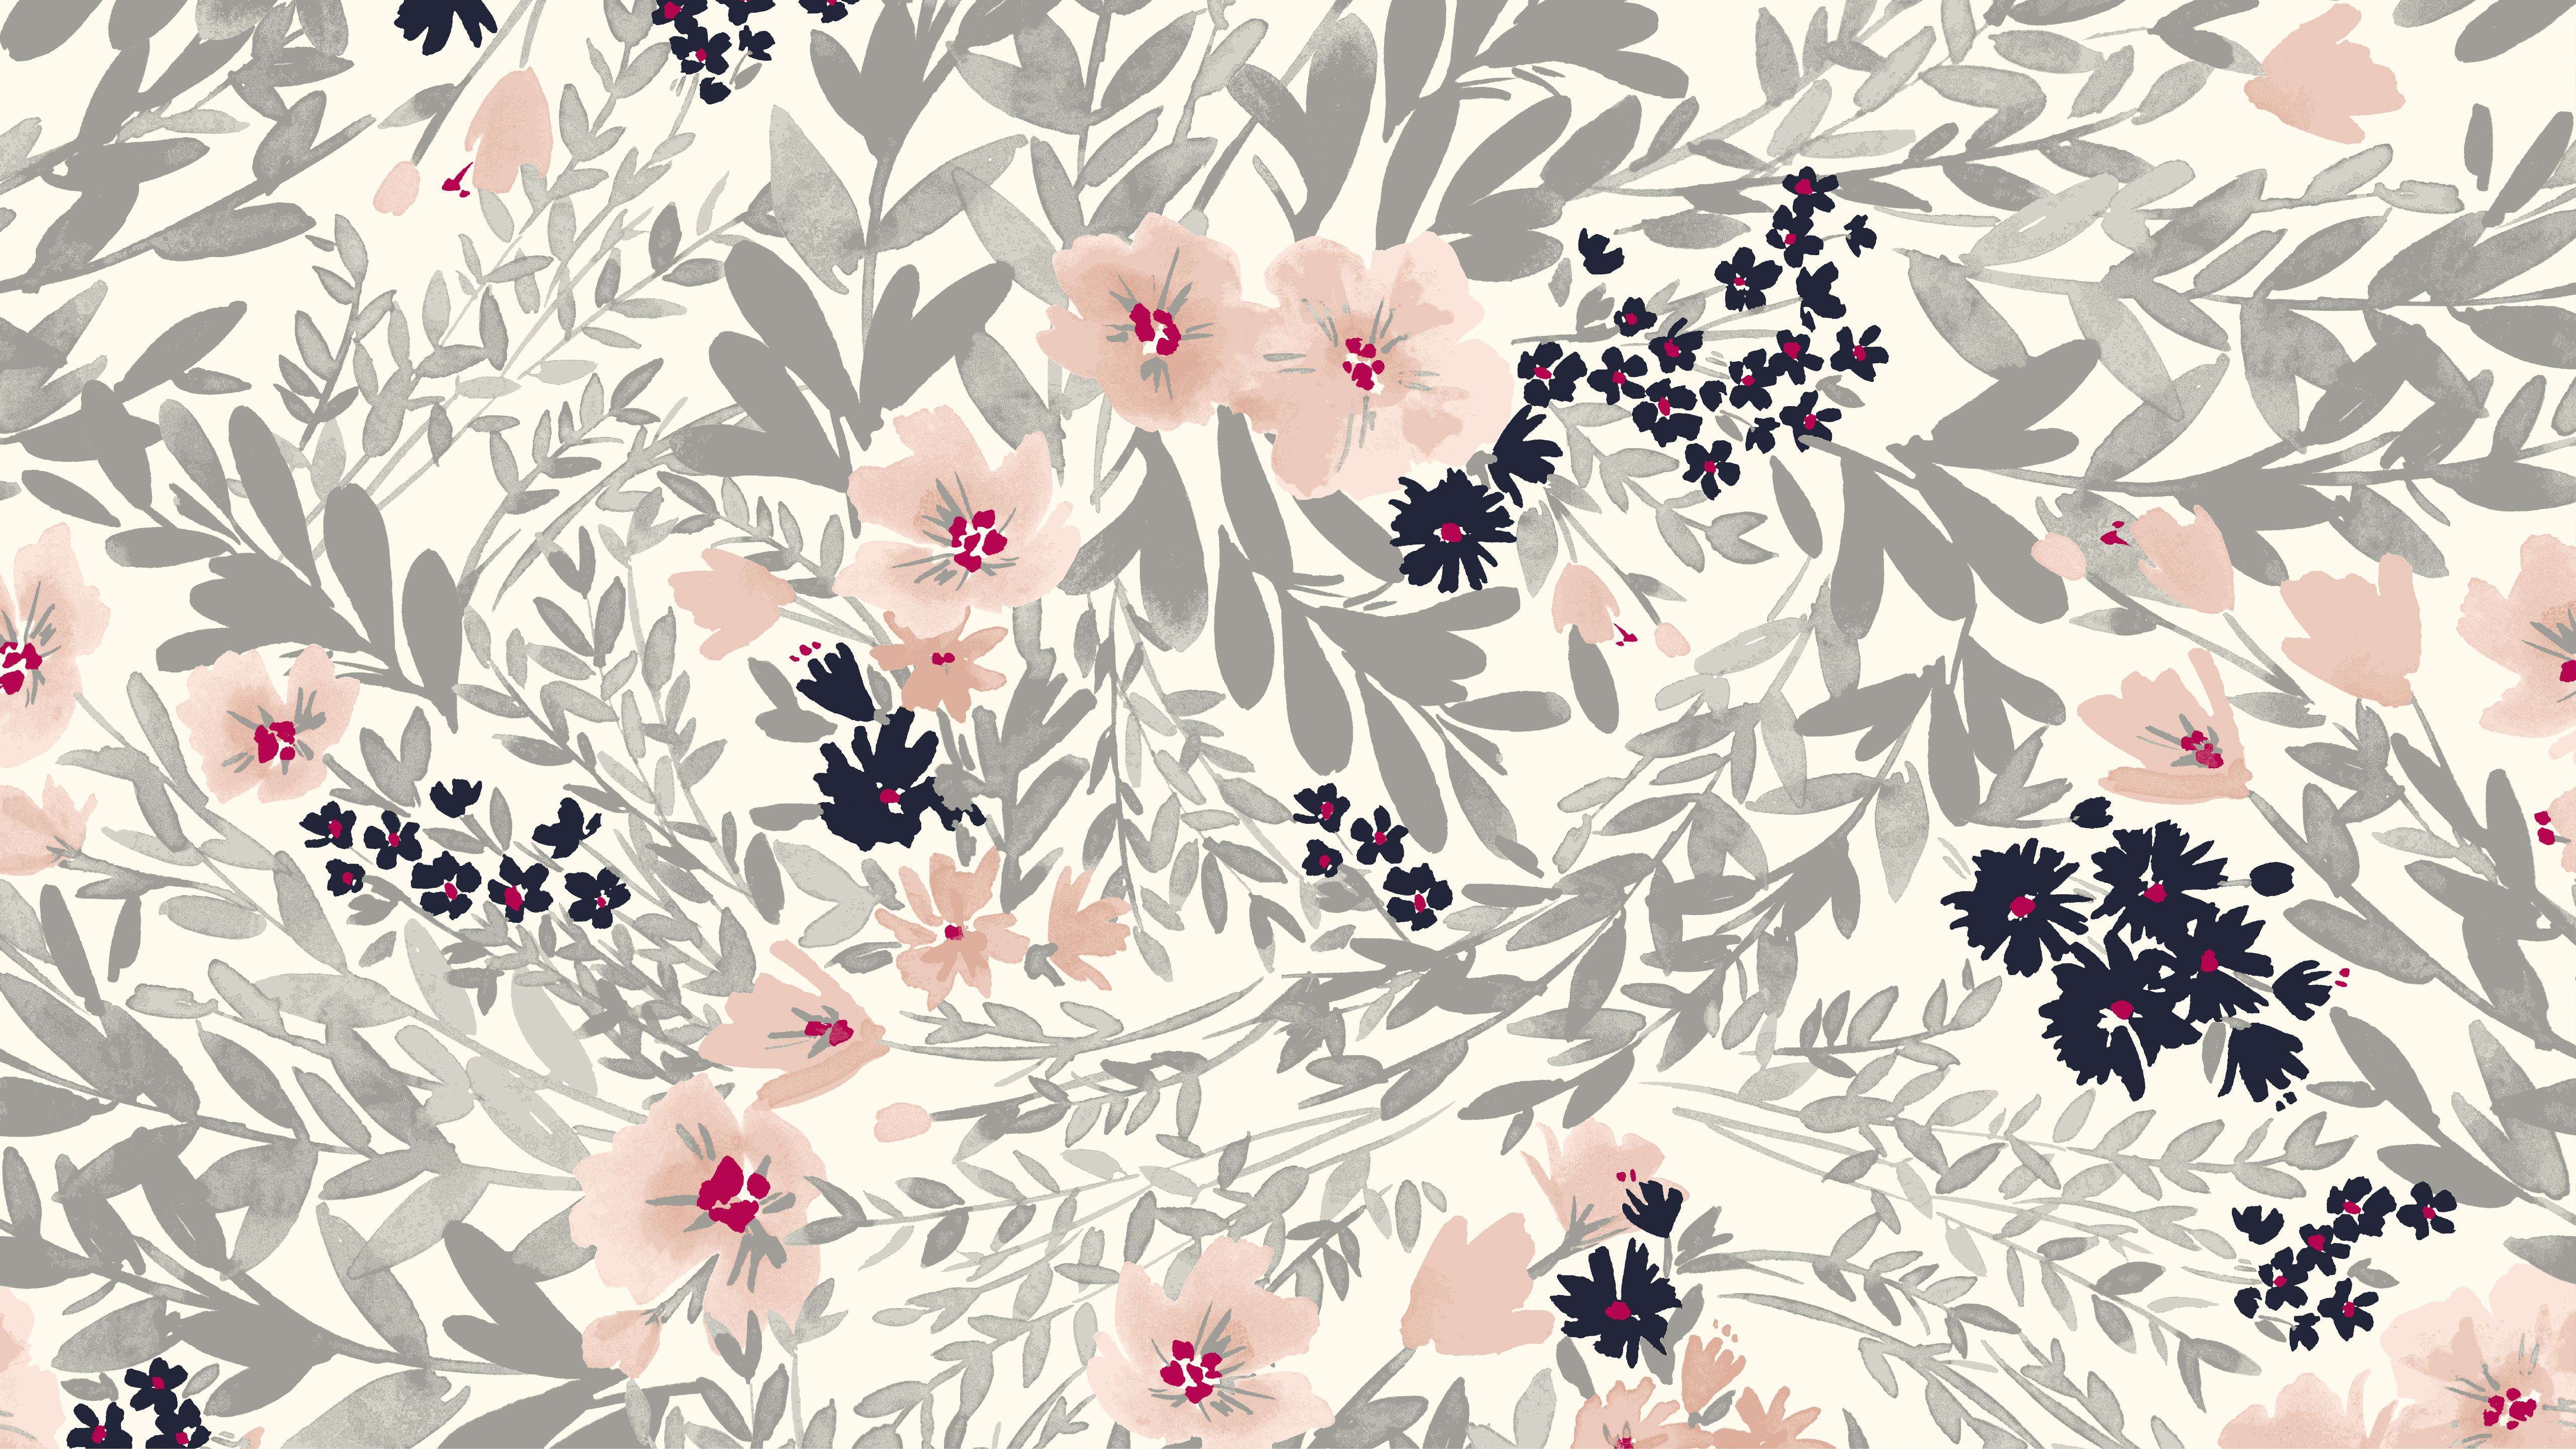 Free download 55 Floral Pattern Desktop Wallpapers Download at